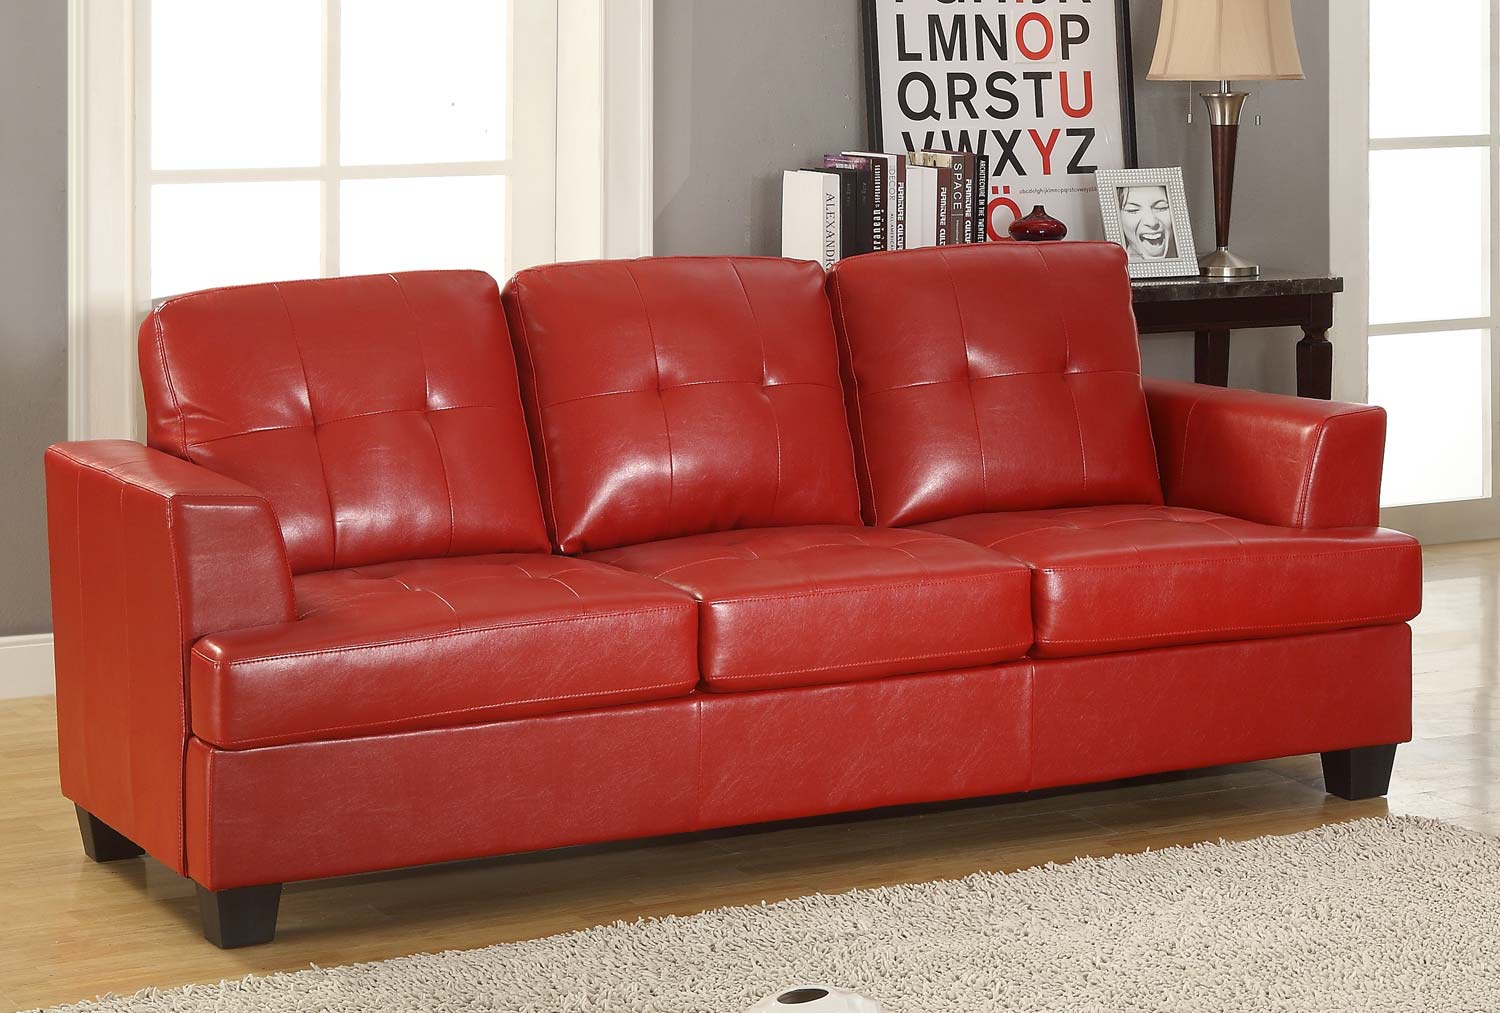 keaton leather sofa reviews